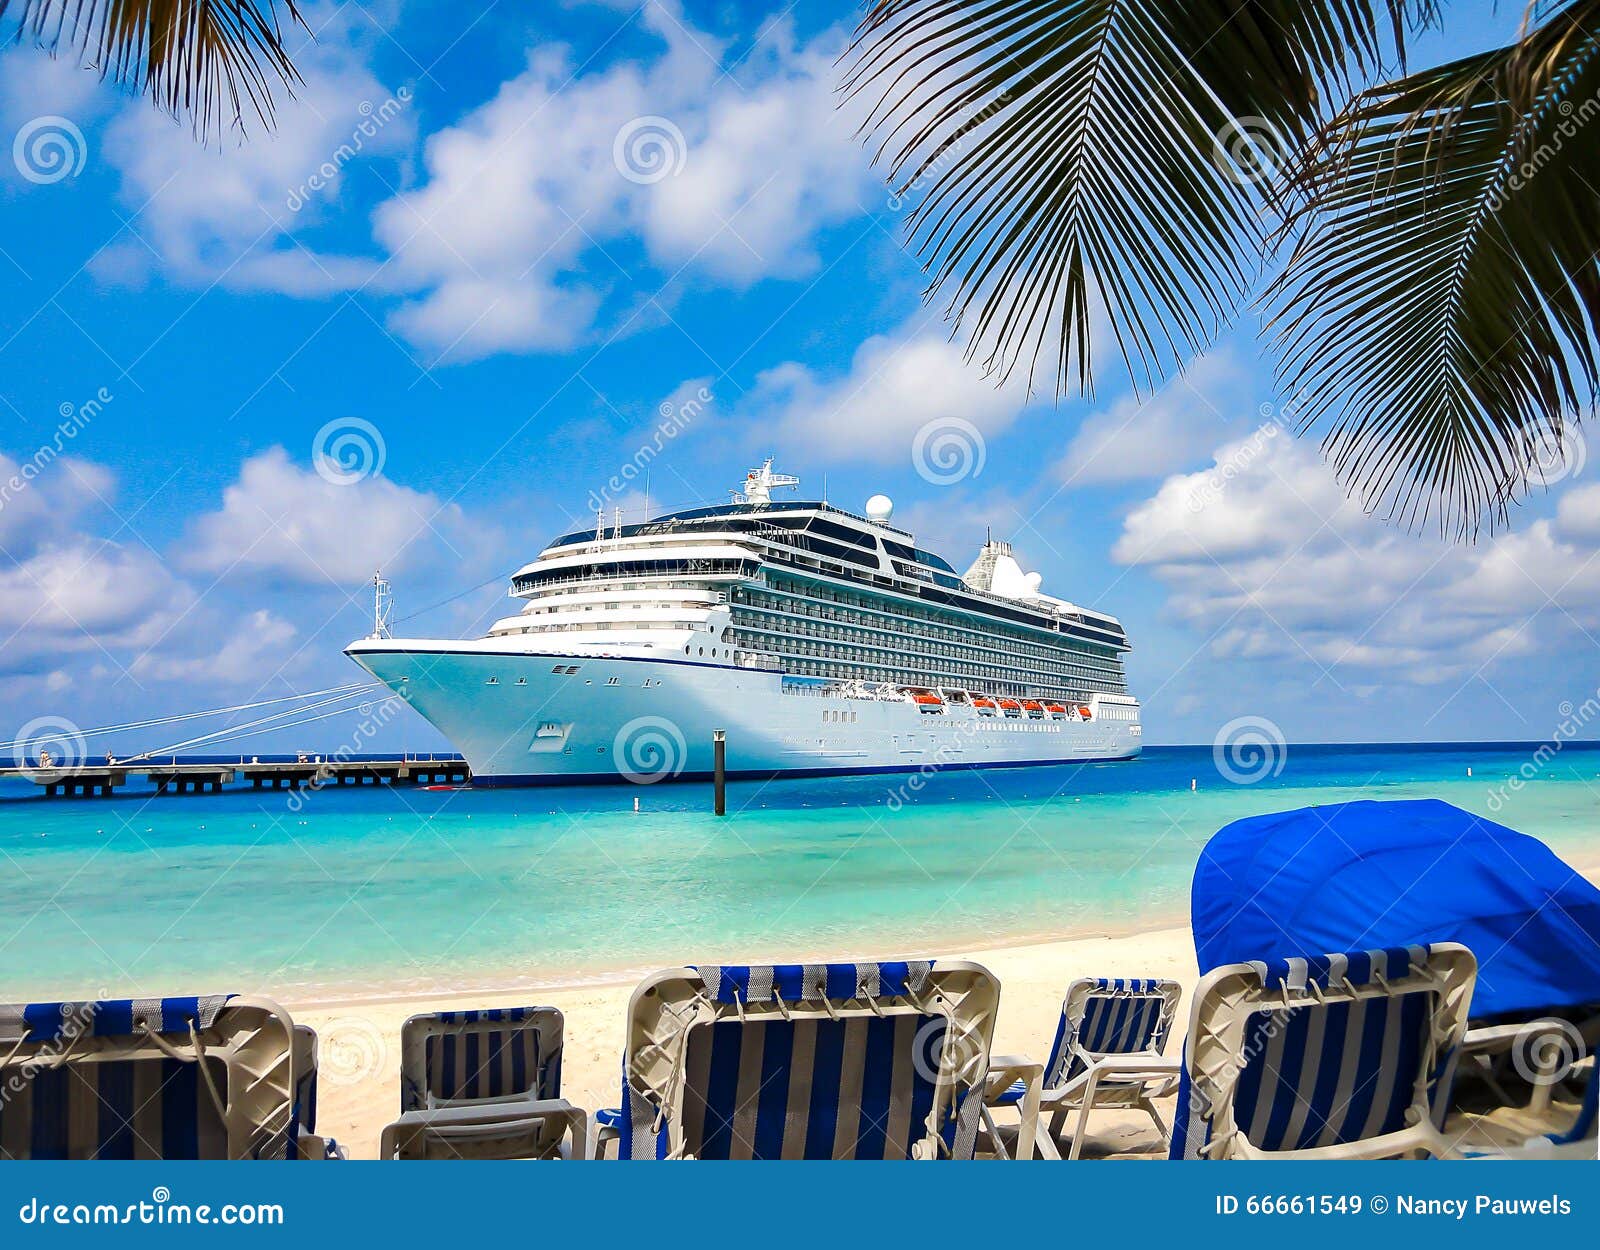 cruise ship docked at caribbean beach.